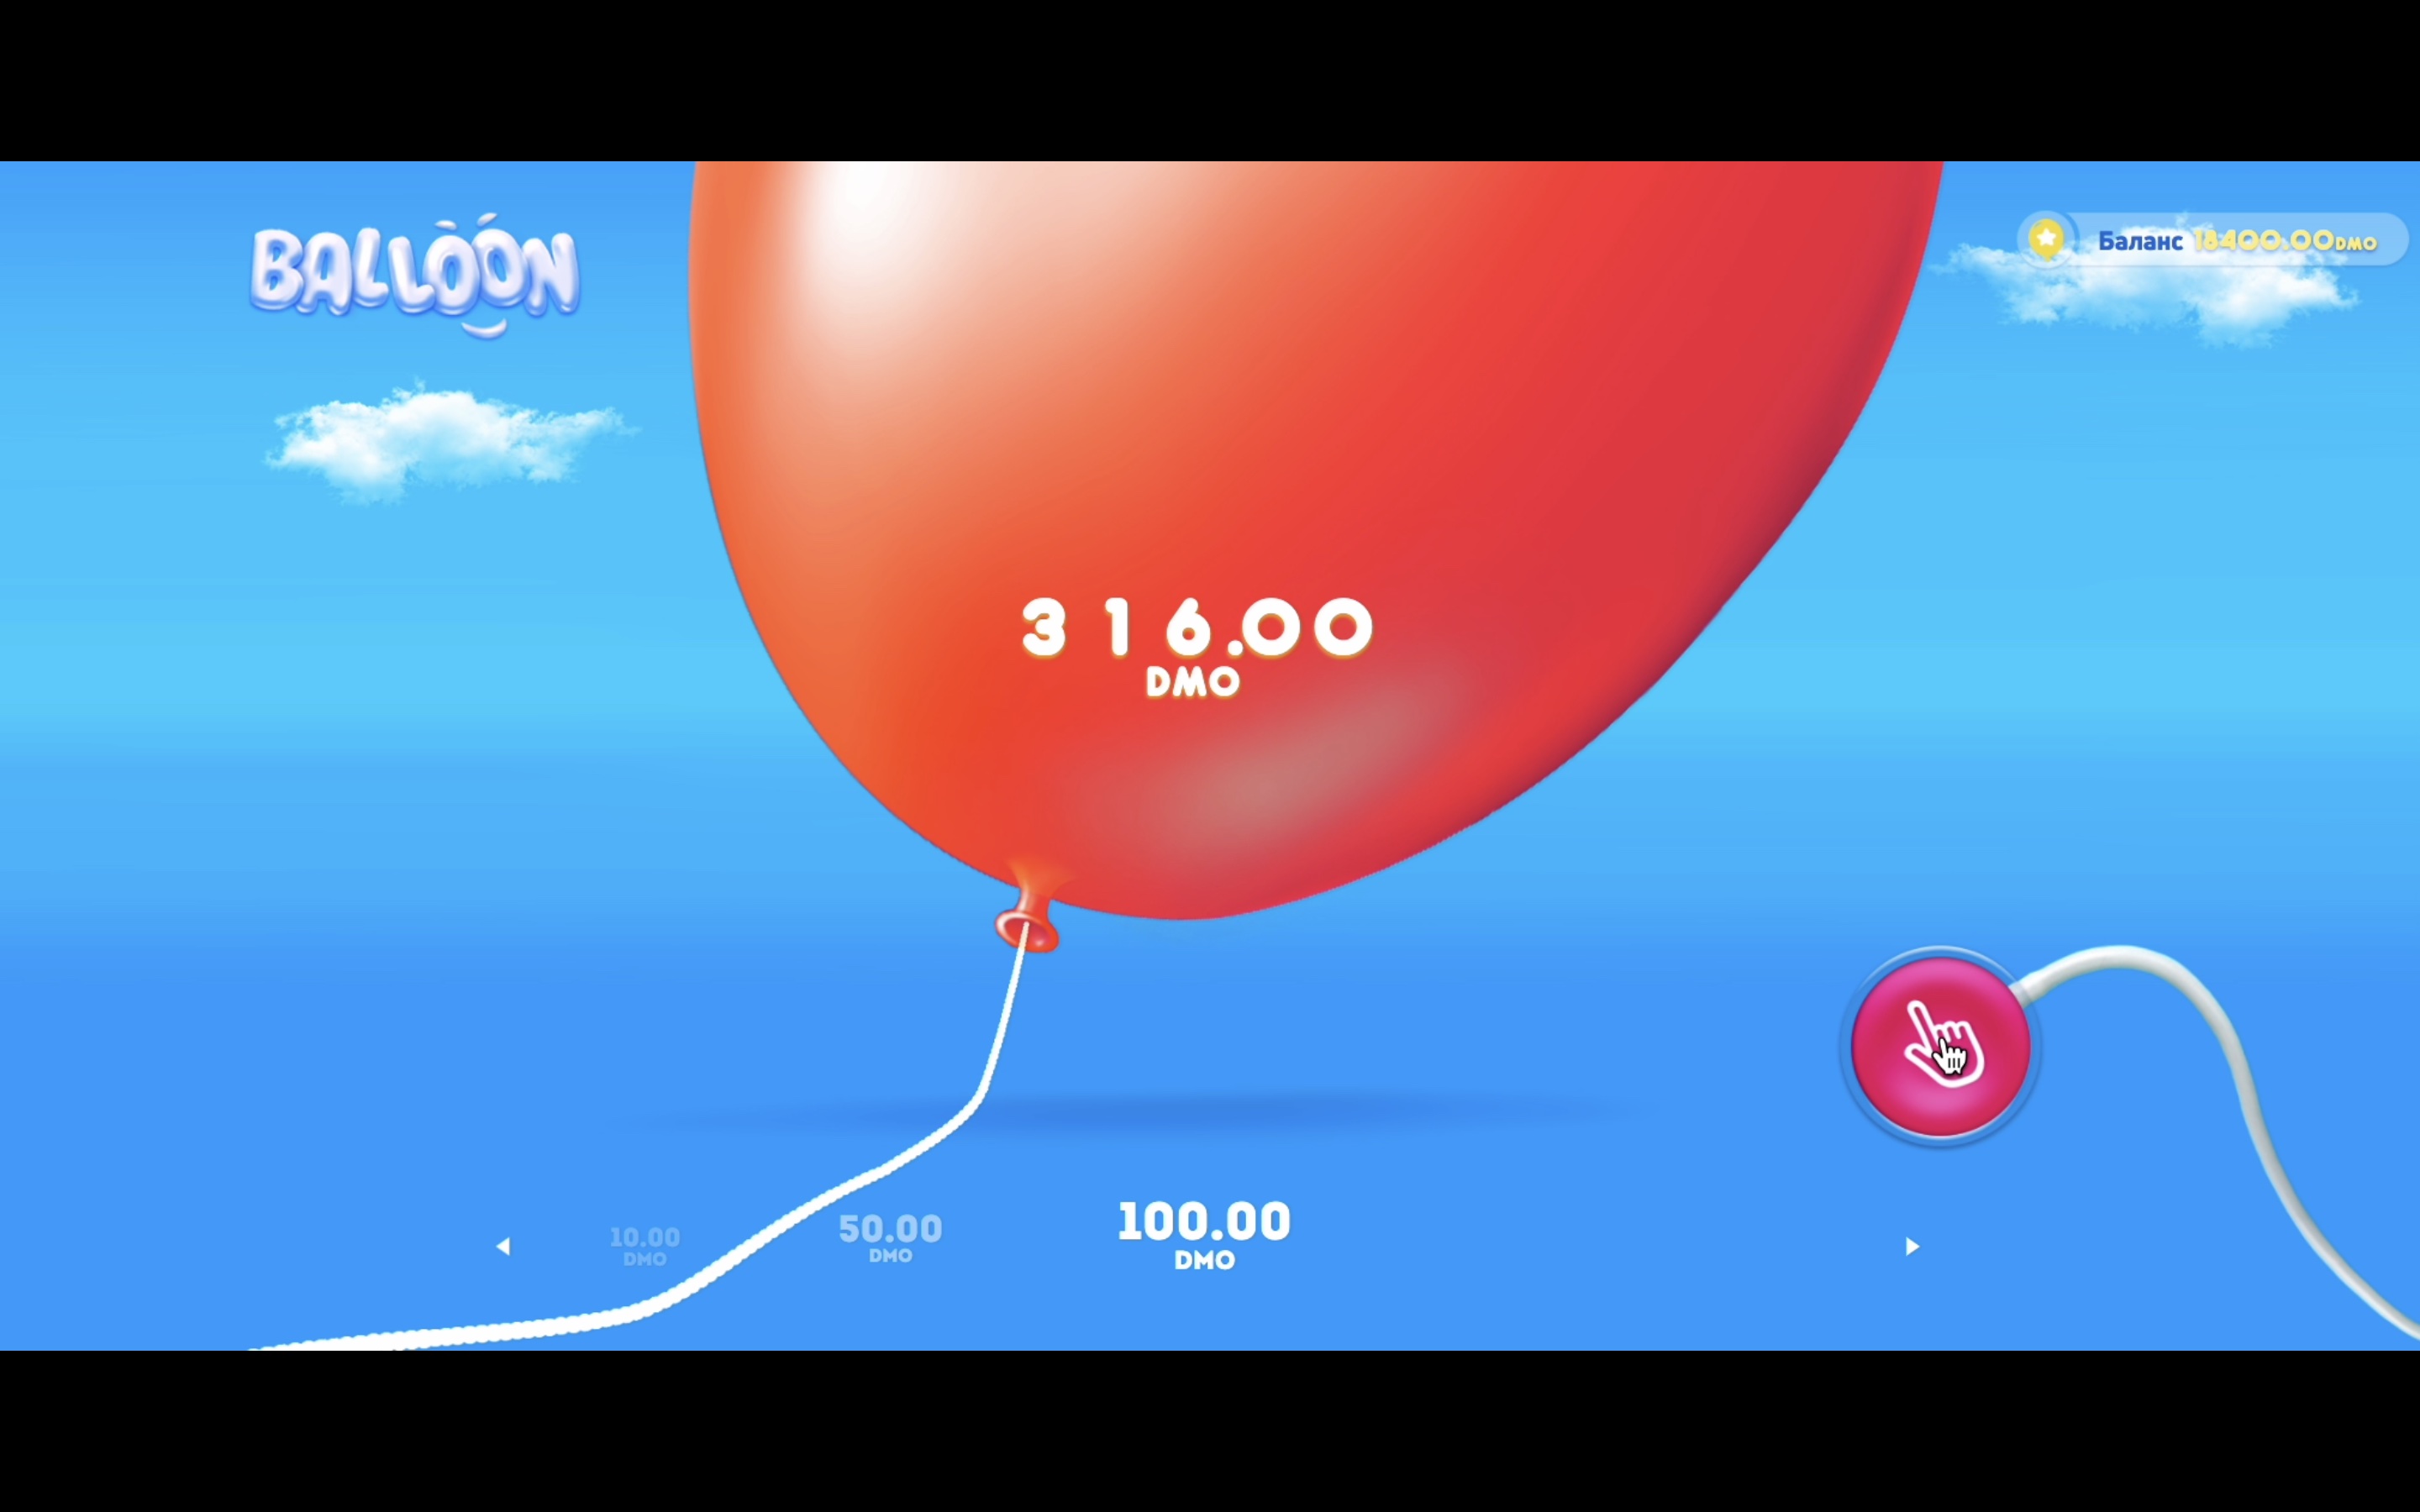 Balloon trial bonus